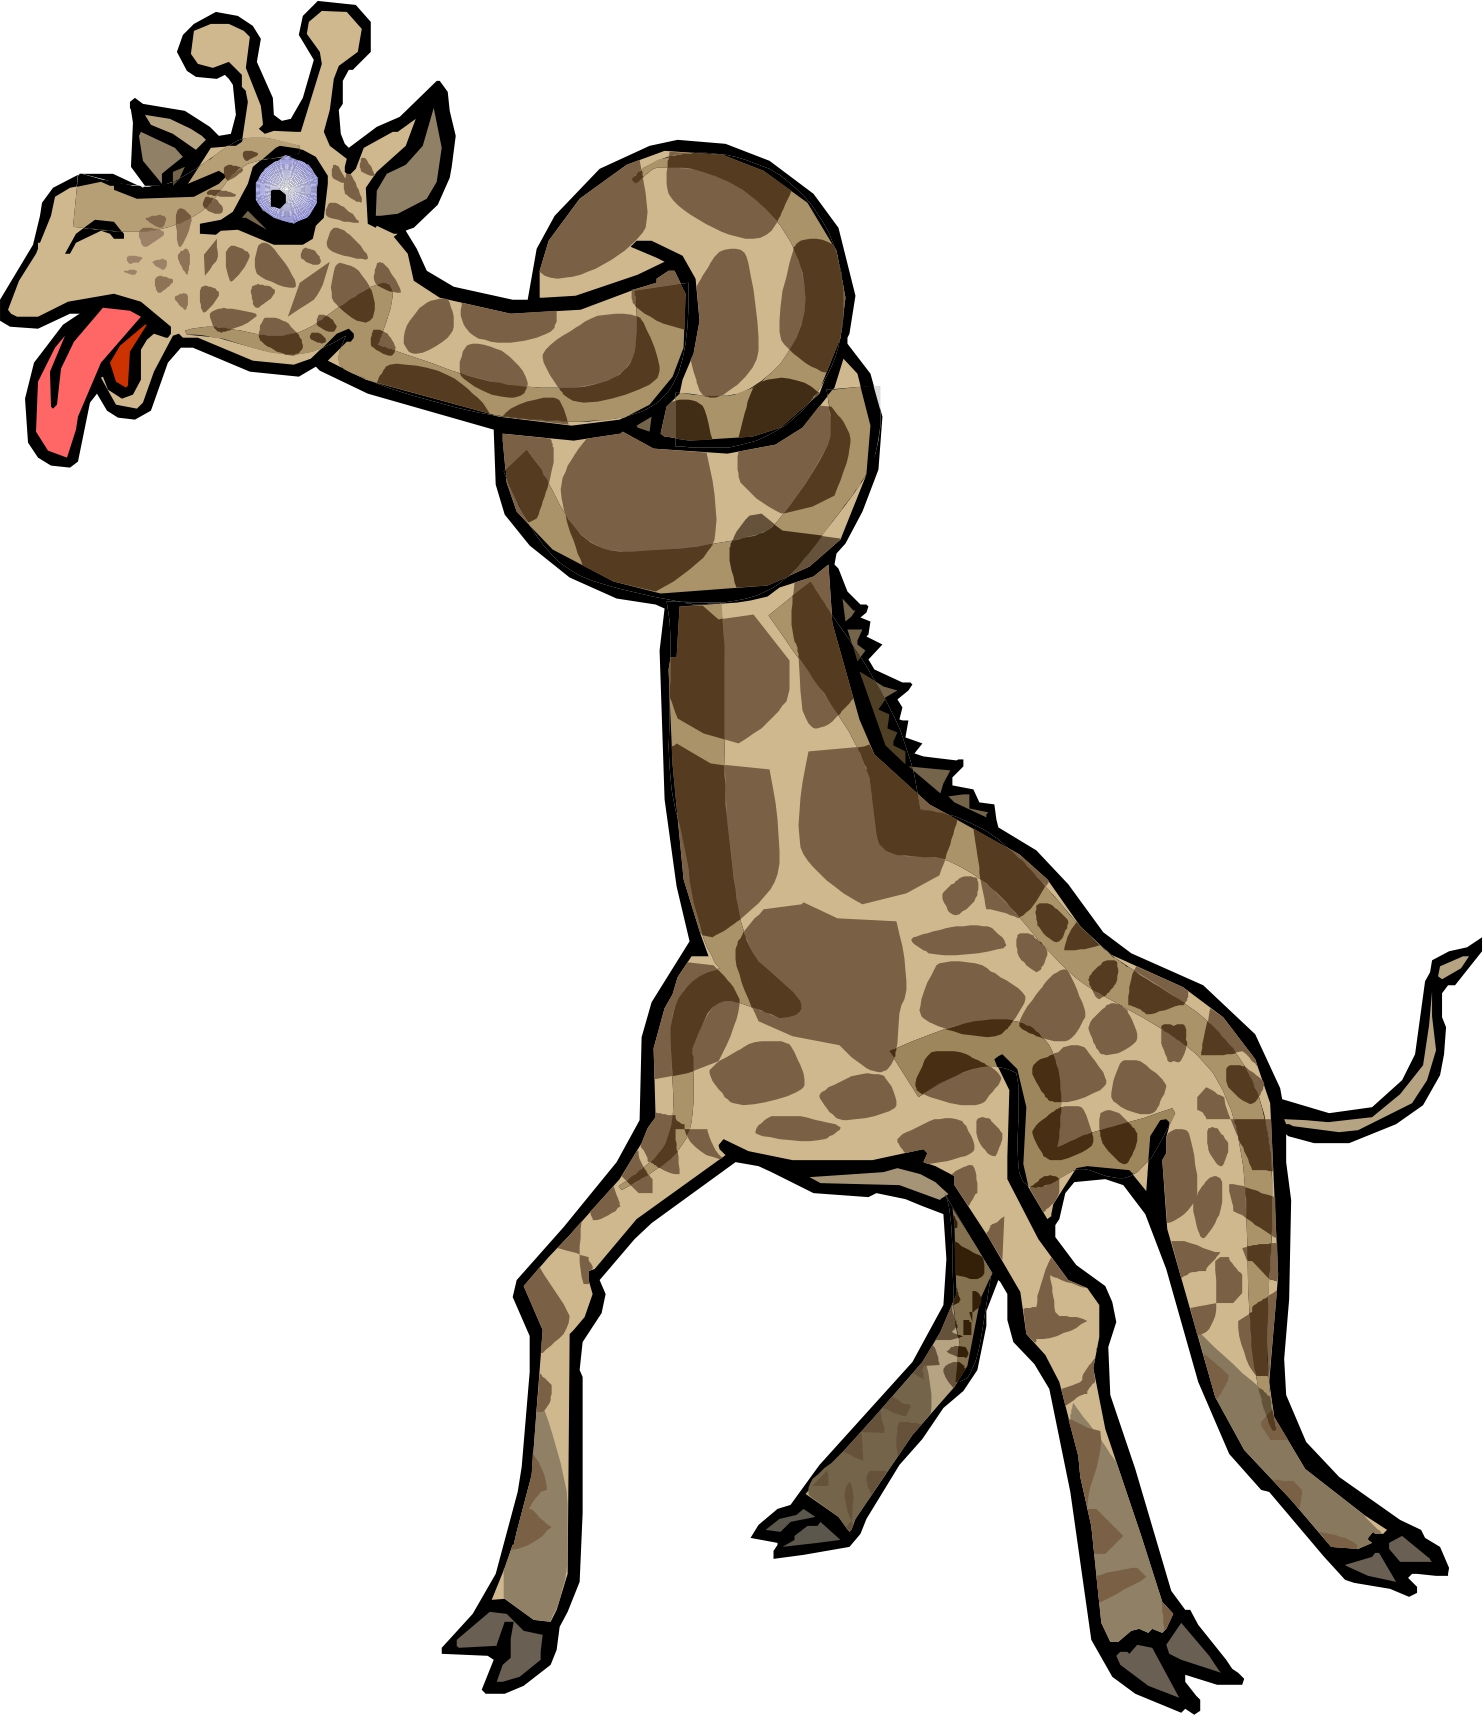 BookNAround: You're a giraffe